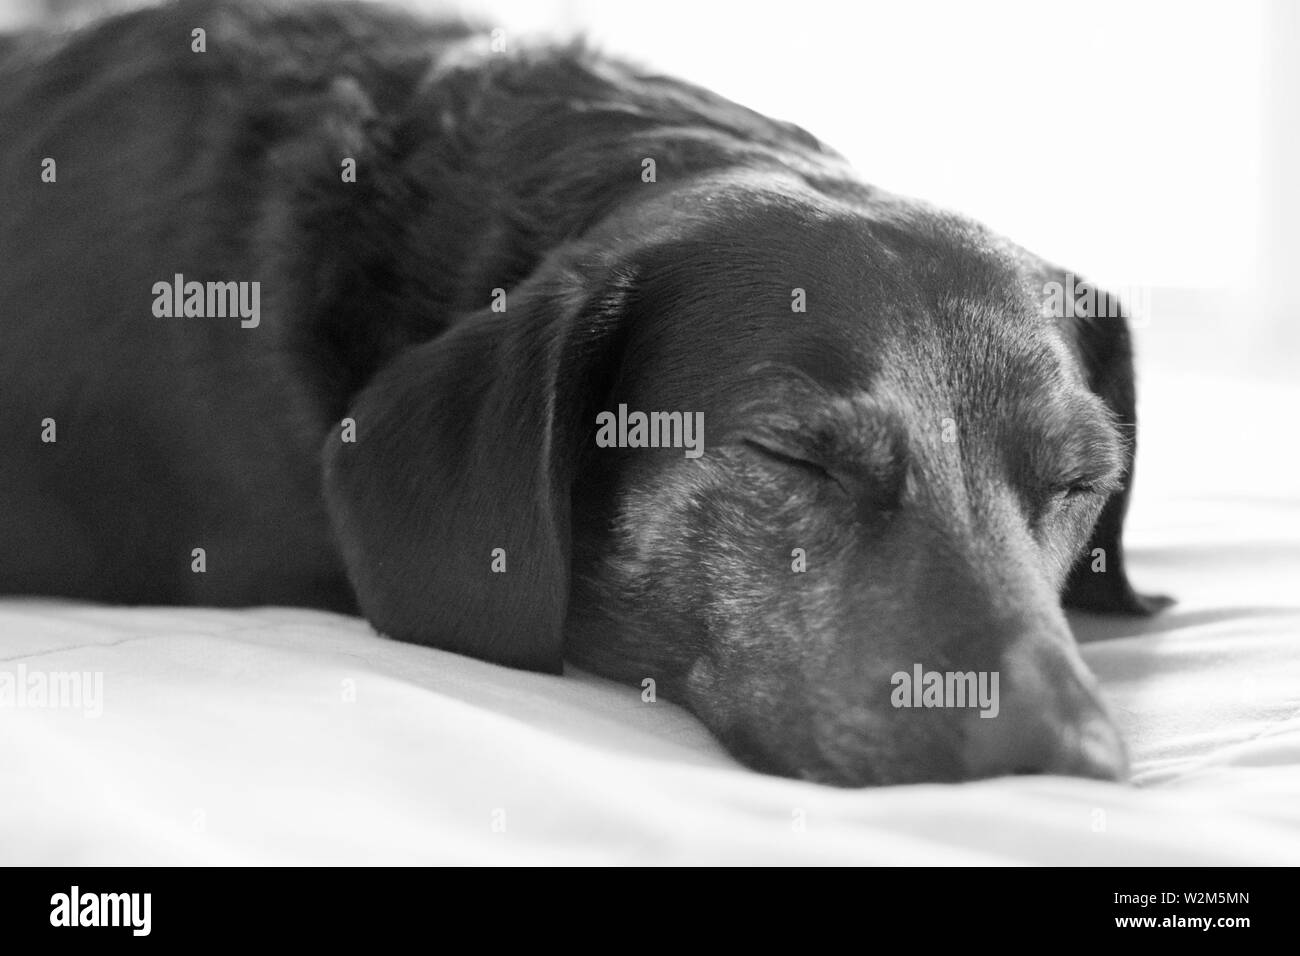 Dachshund Asleep Black And White Stock Photo Alamy